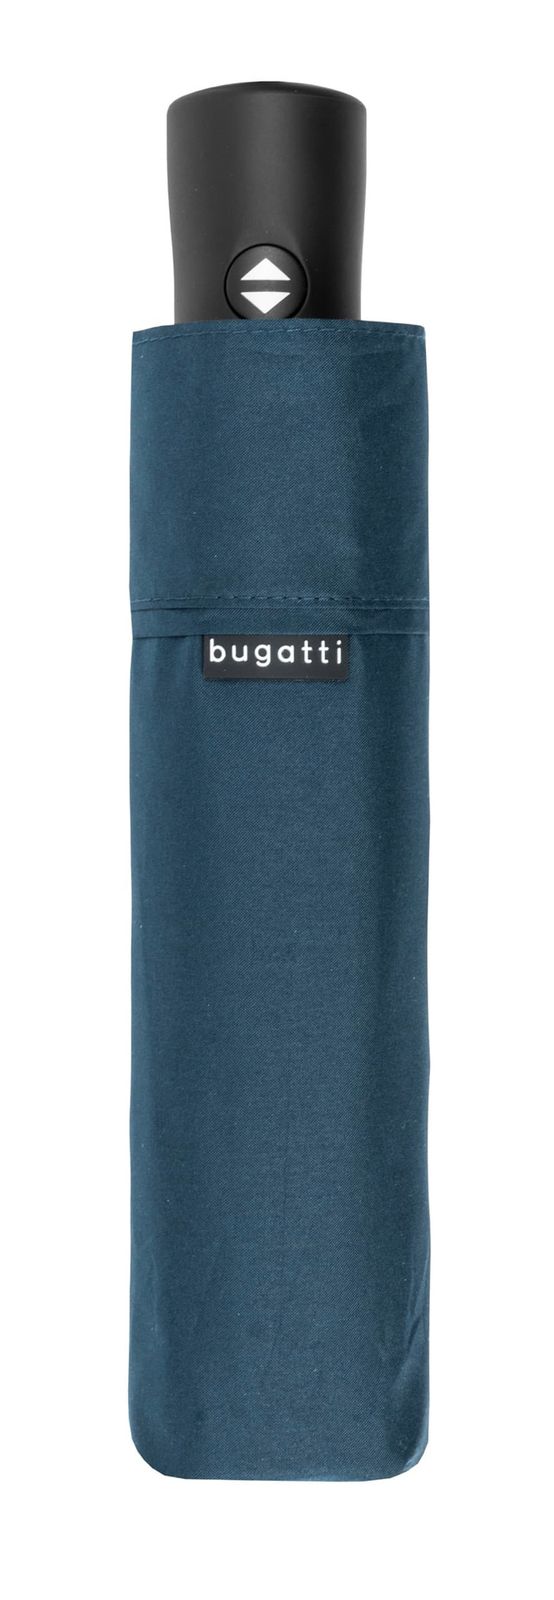 bugatti Buddy Magic Buy & Blue accessories | Crystal | Uni Duo modeherz purses bags, online